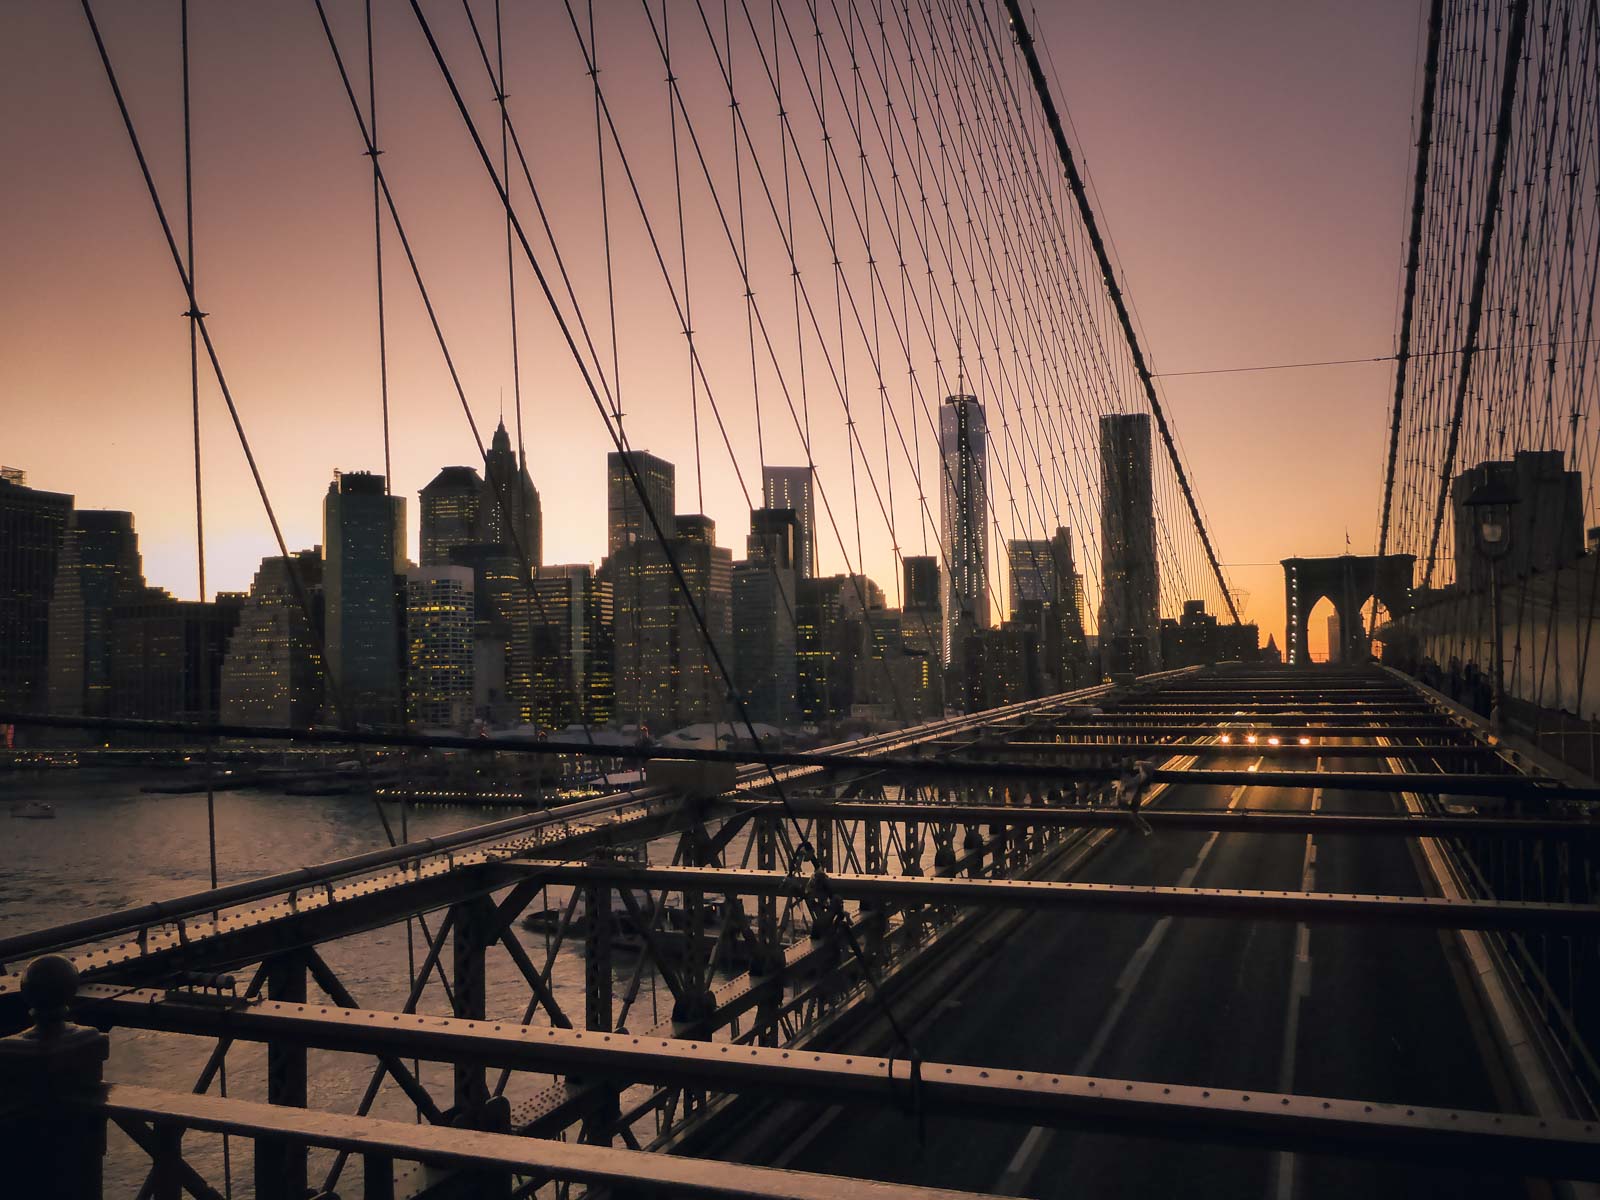 Crossing the Brooklyn Bridge at sunset